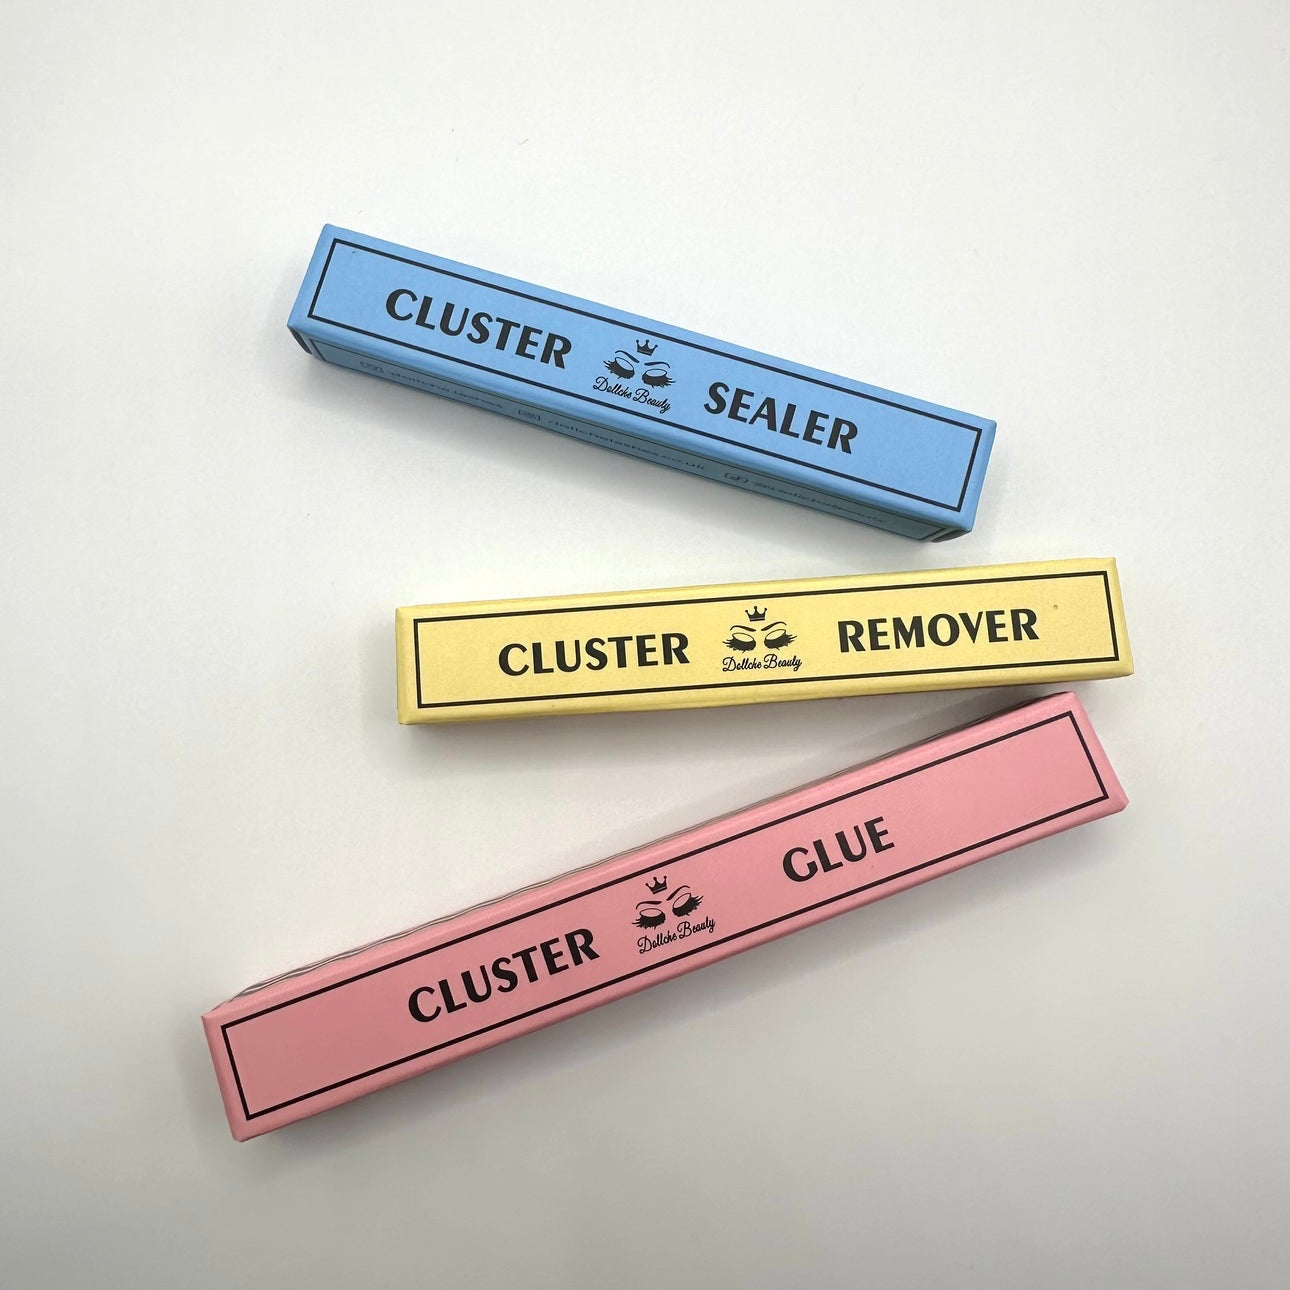 Cluster Glue, Seal & Remover Bundle (GLUE FAULTY)!!